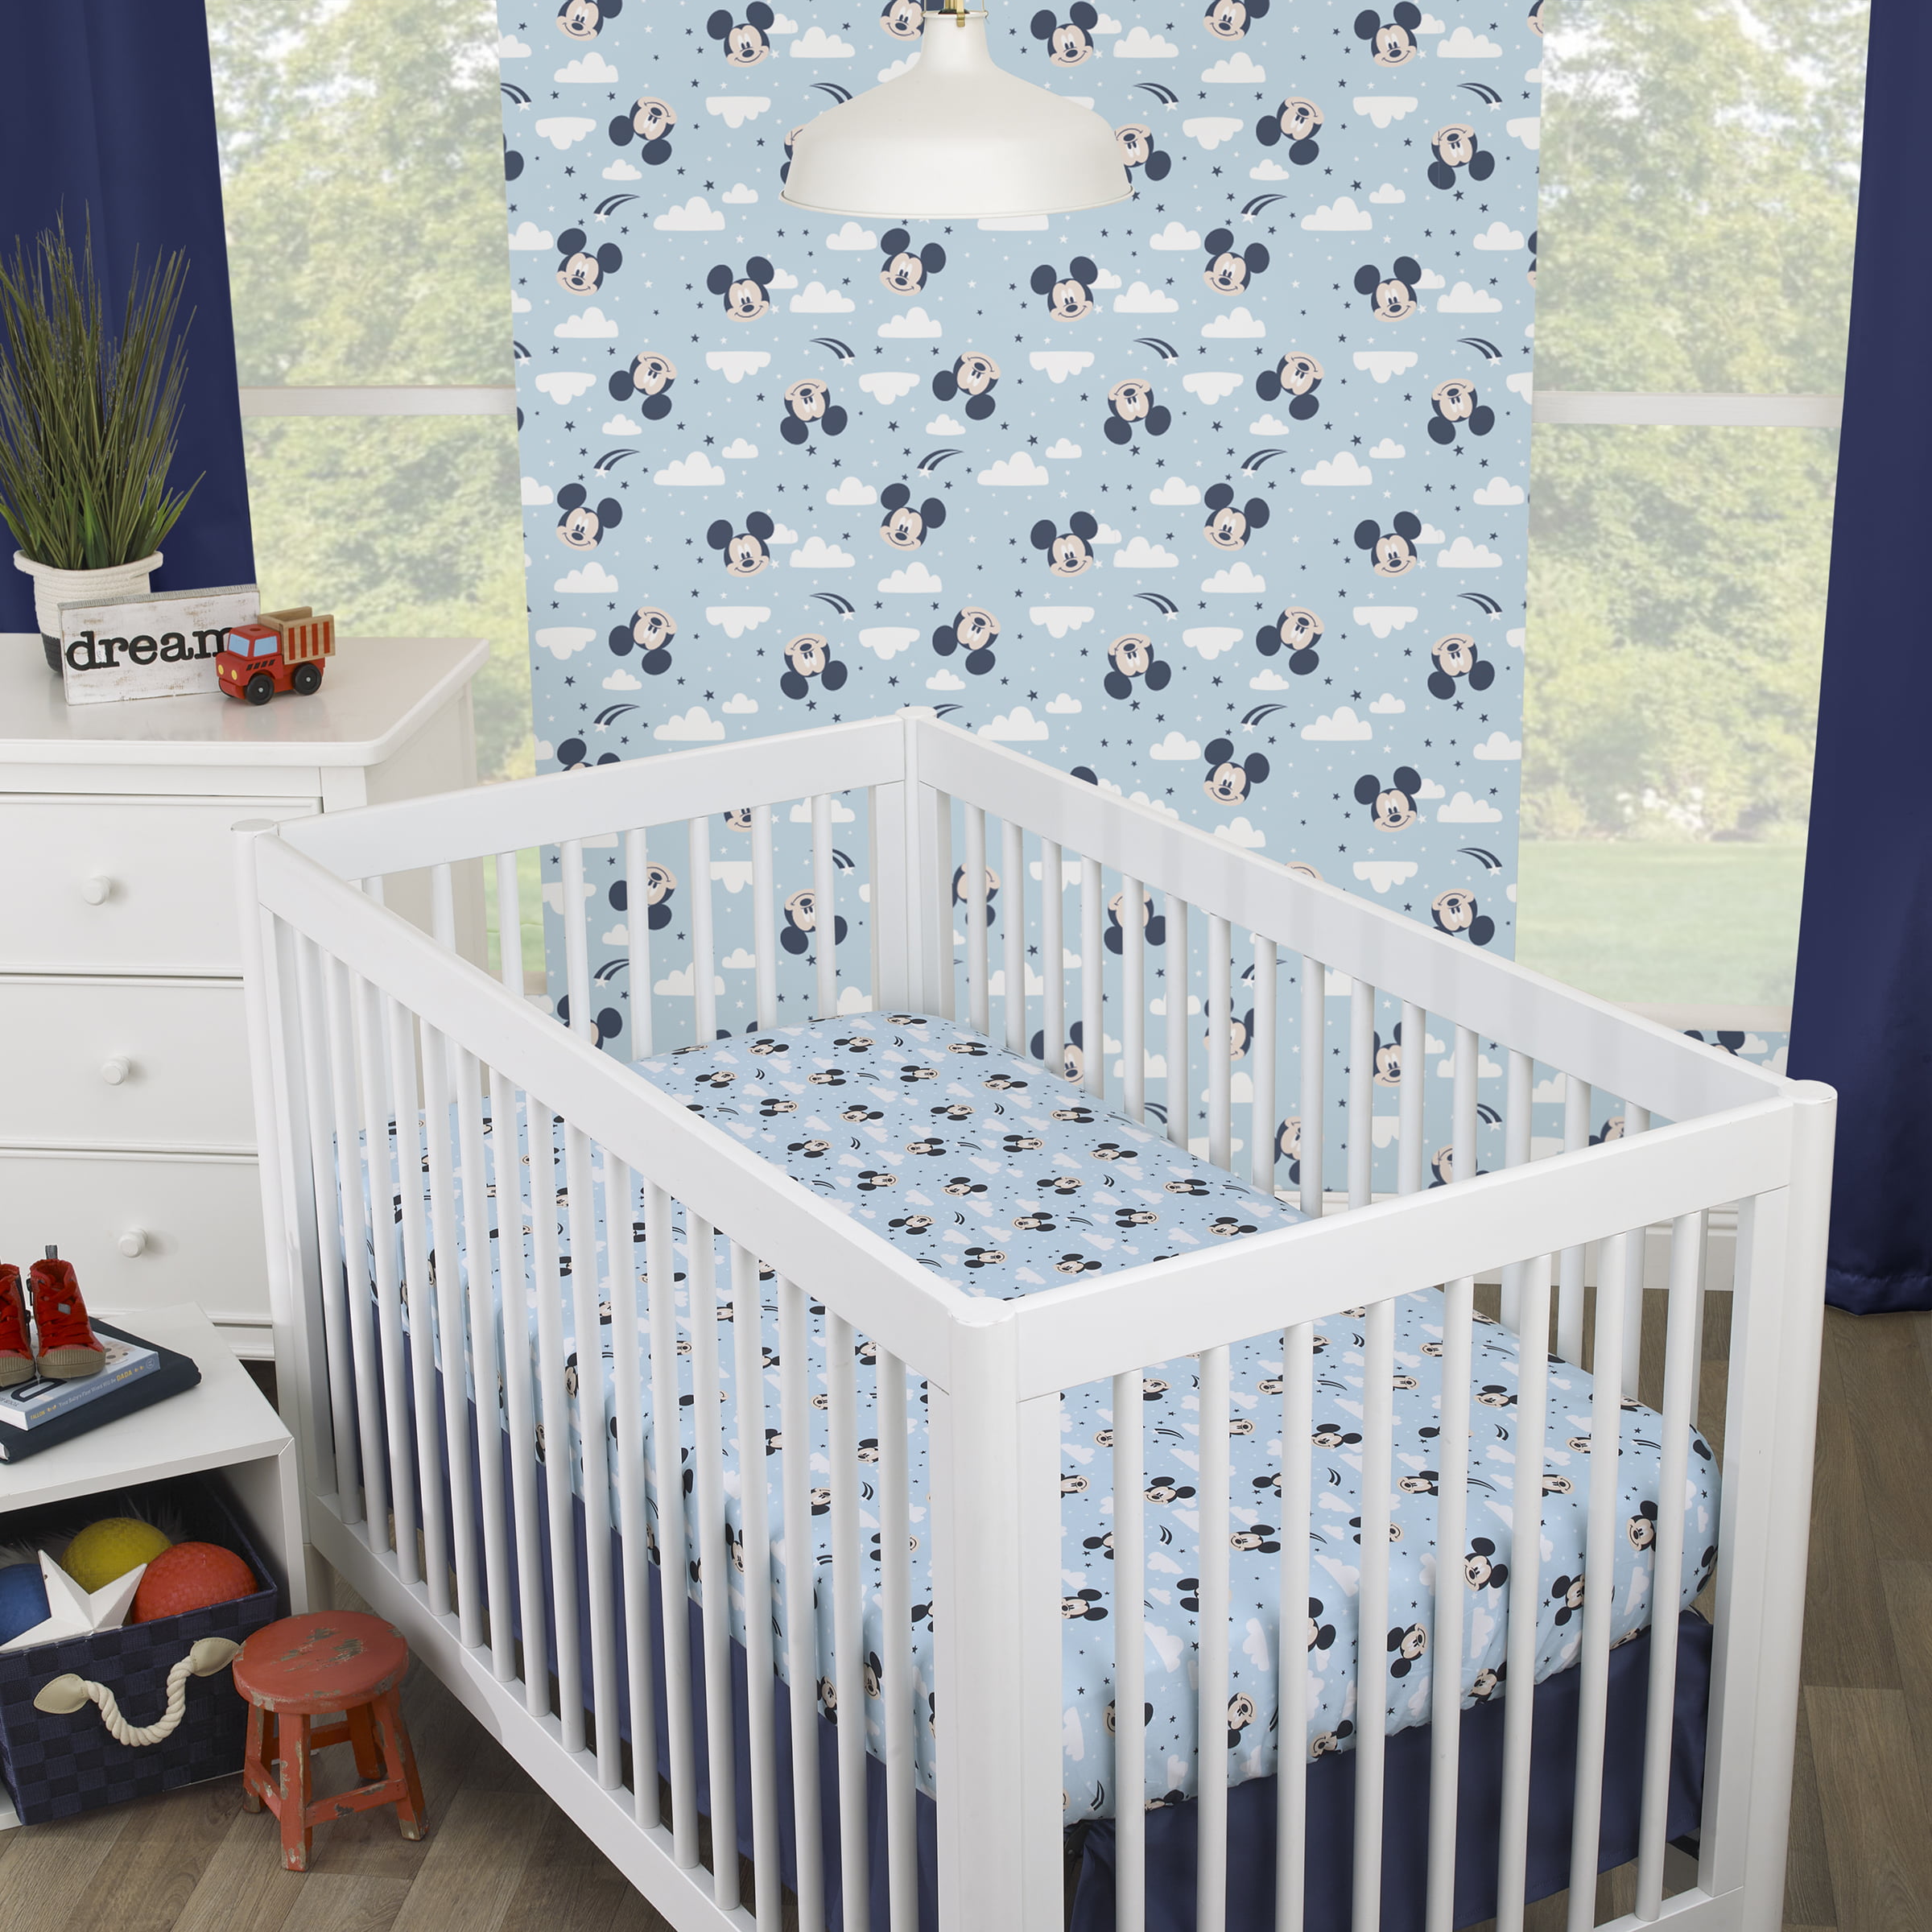 Handmade Cot Bar Bumpers Set Of 8 Navy & White Stars New Baby Boy Shower Gift 